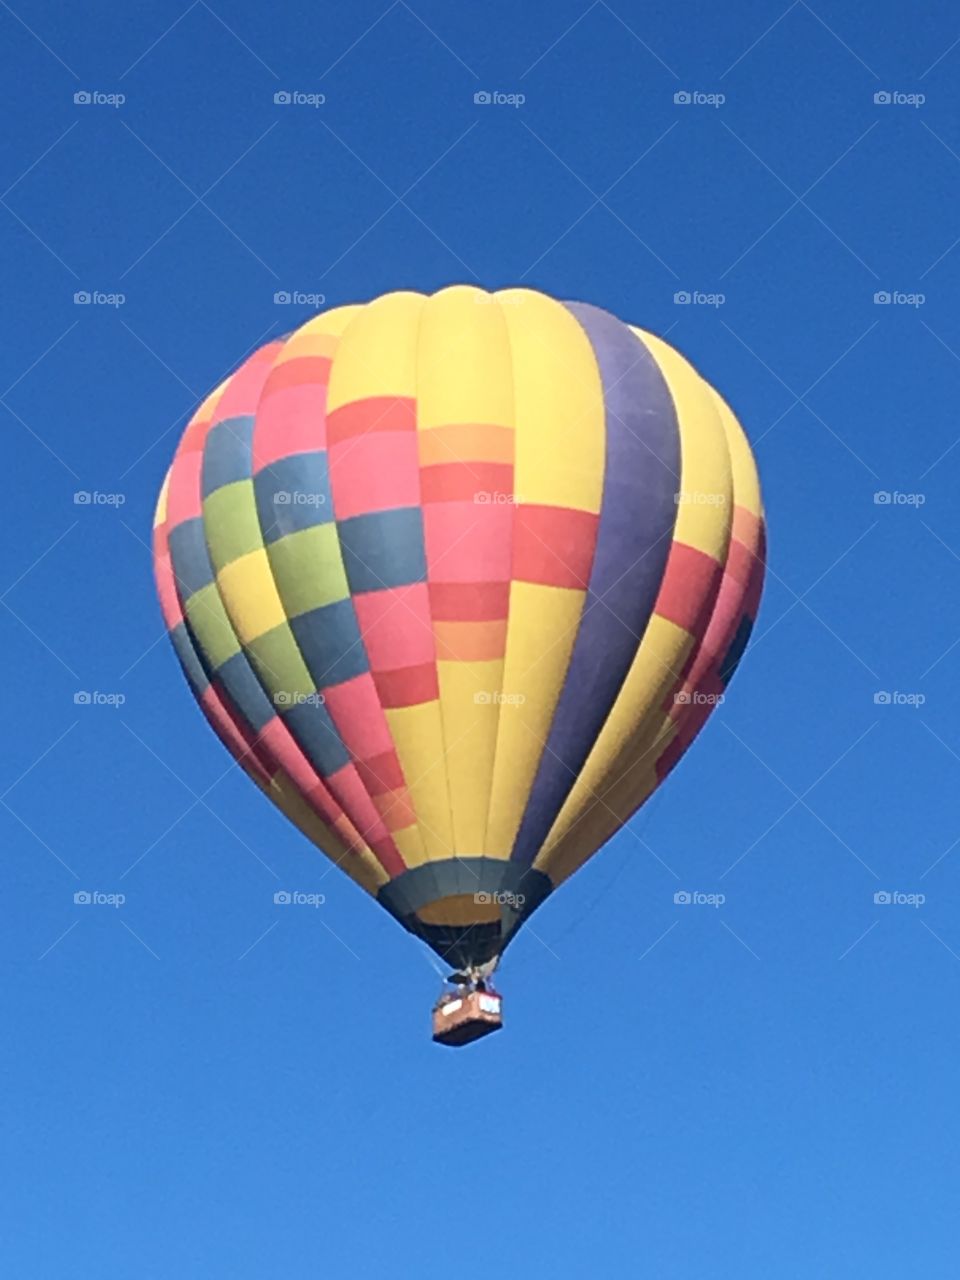 Closeup of Patterned Hot Air Balloon Flight